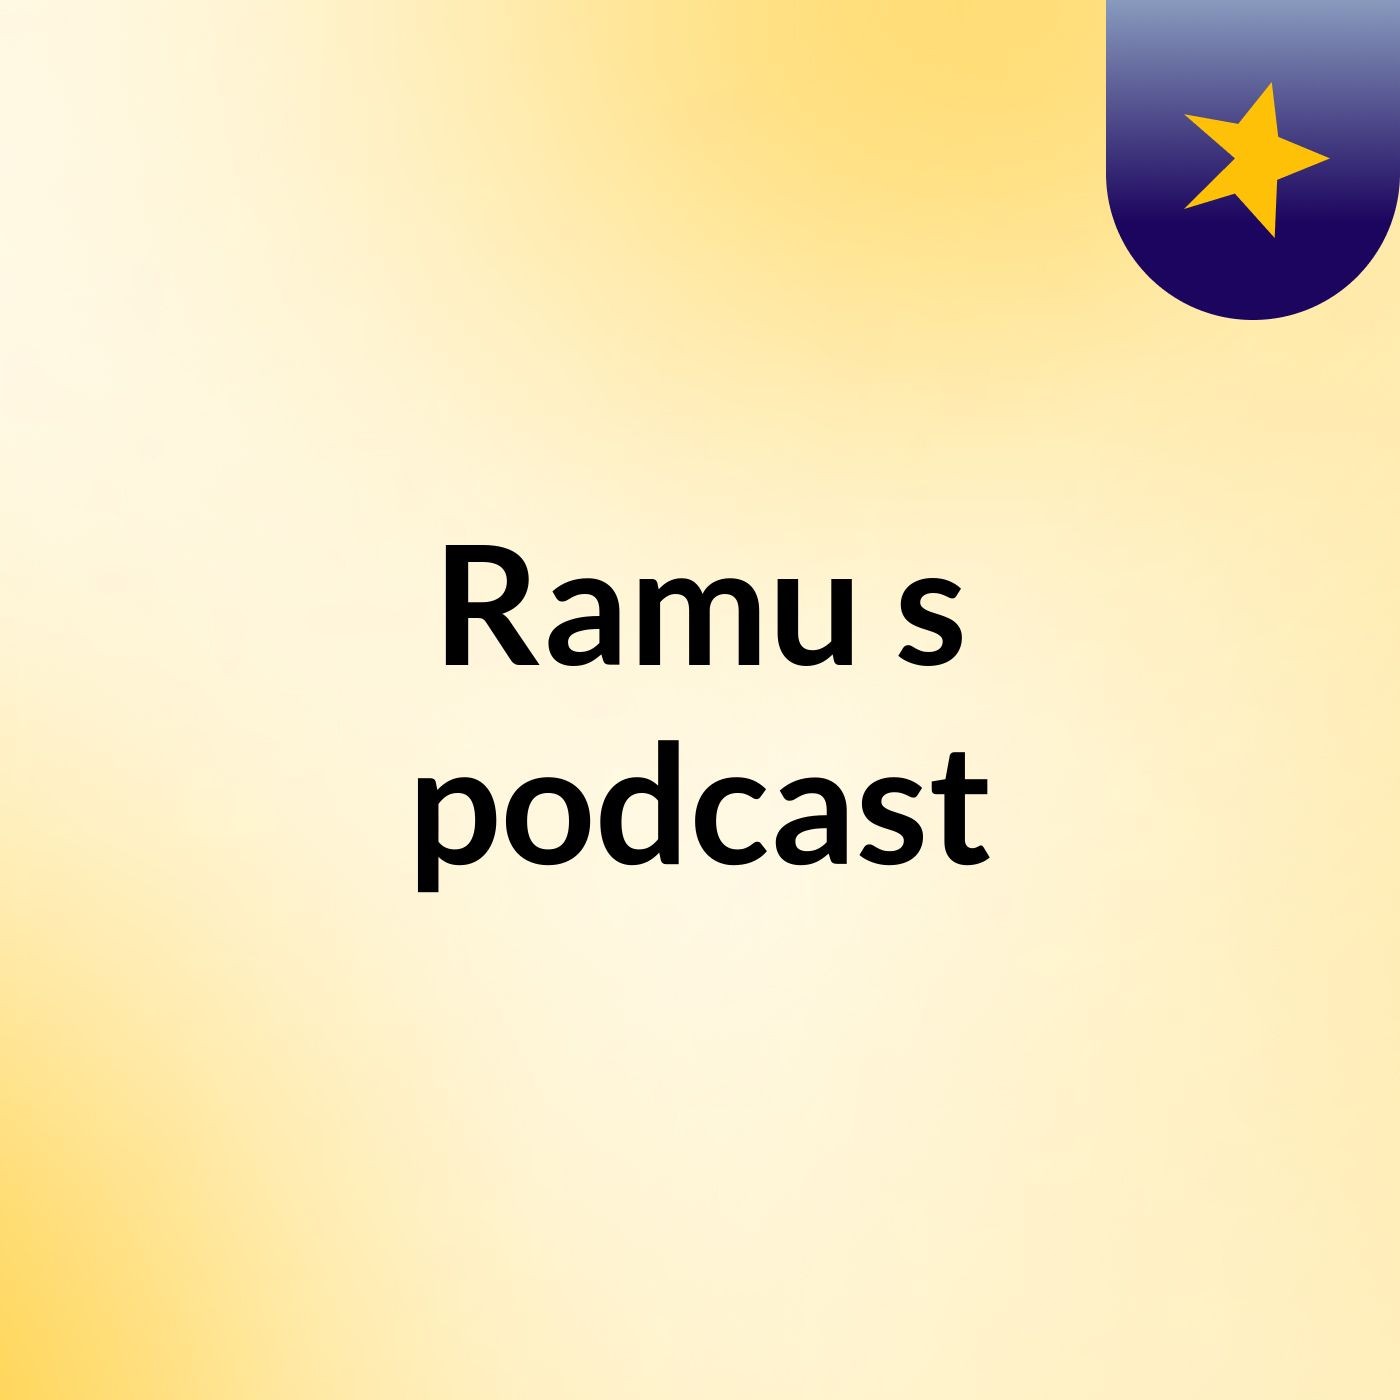 Re visionEpisode 15 - Ramu's podcast